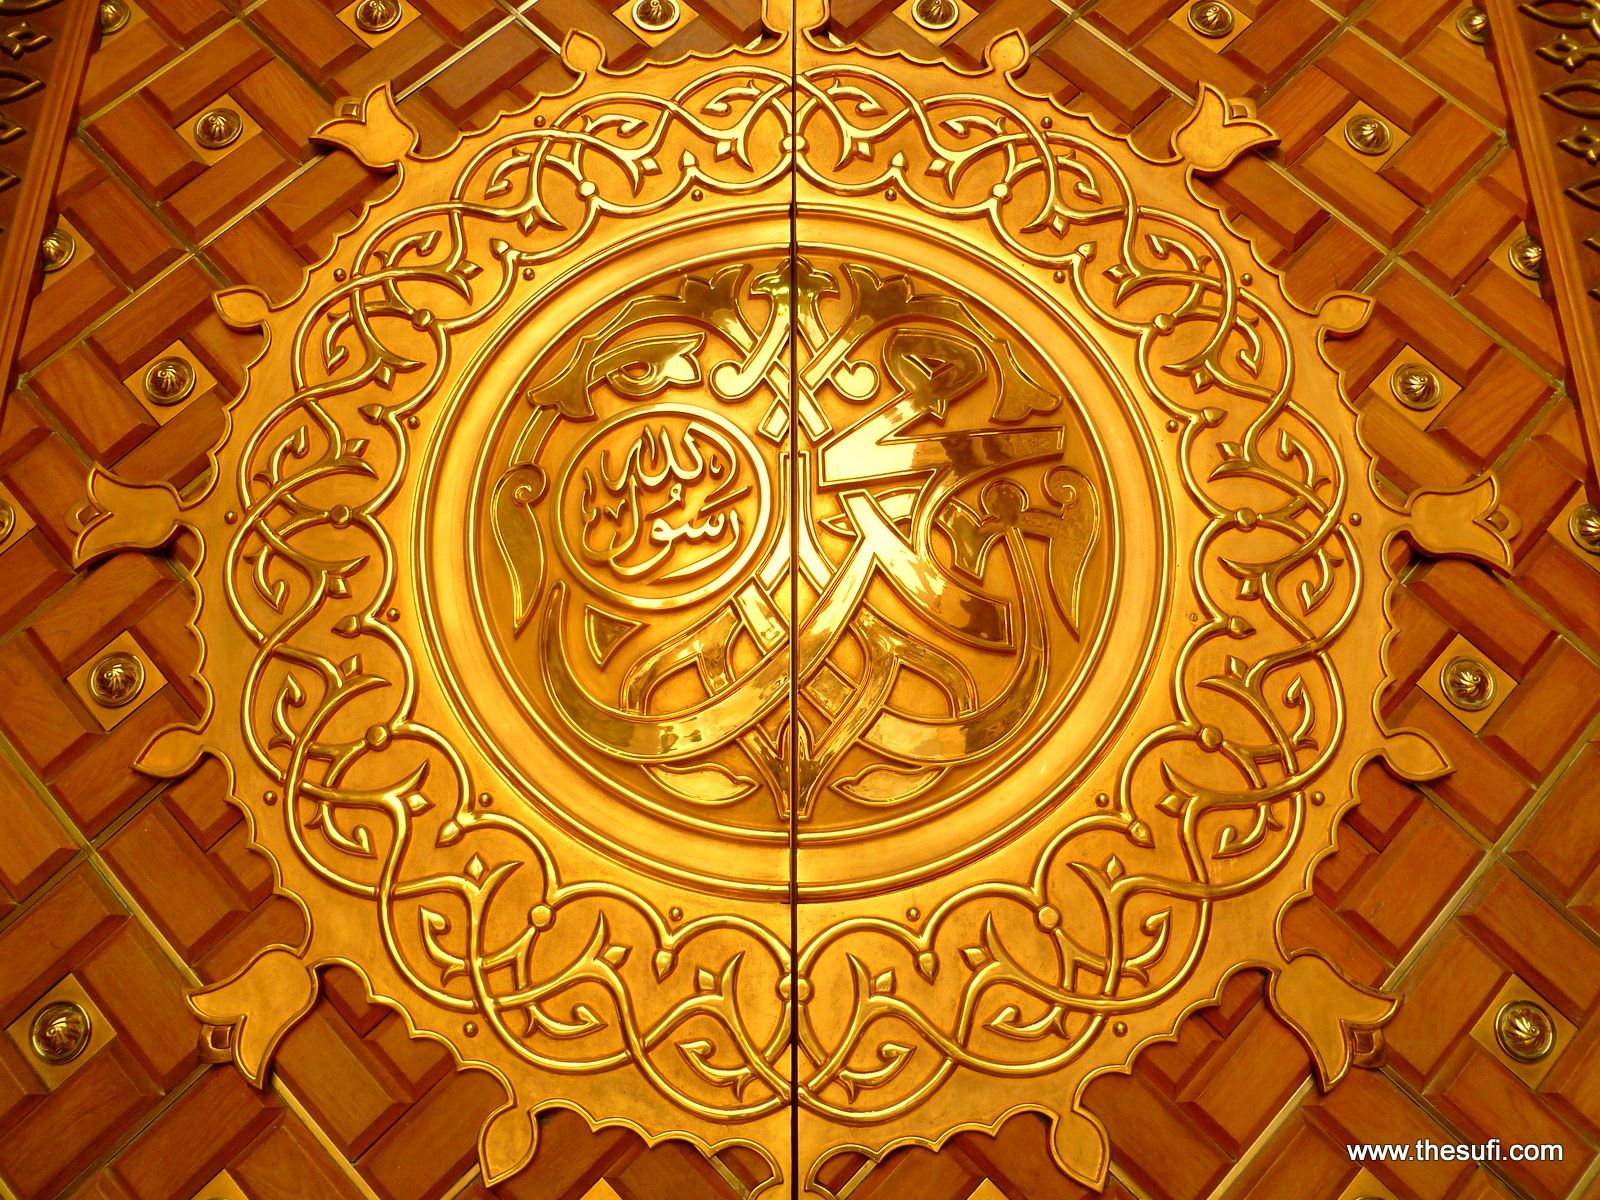 Islamic Art wallpaper of Mecca and Medina